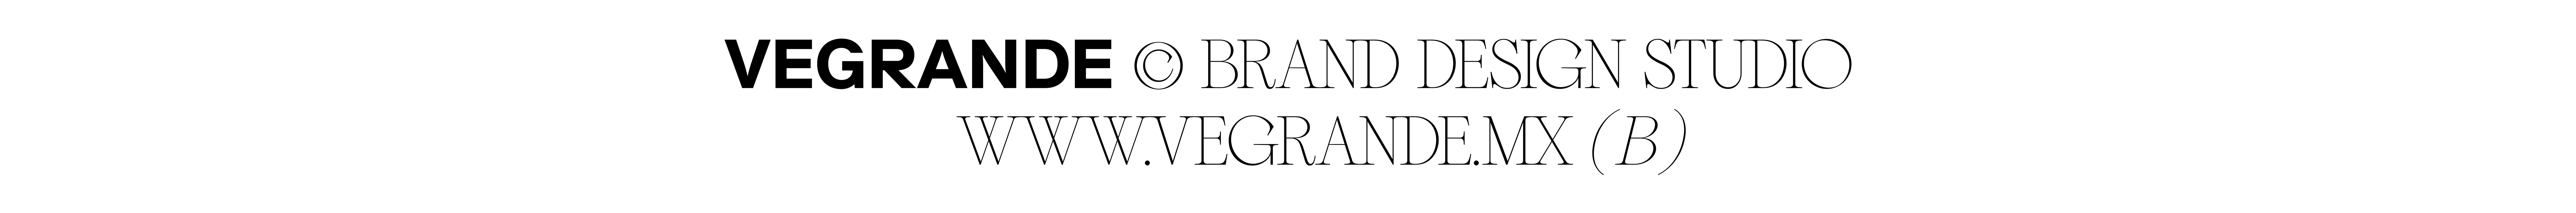 Banner profilu uživatele VEGRANDE ®